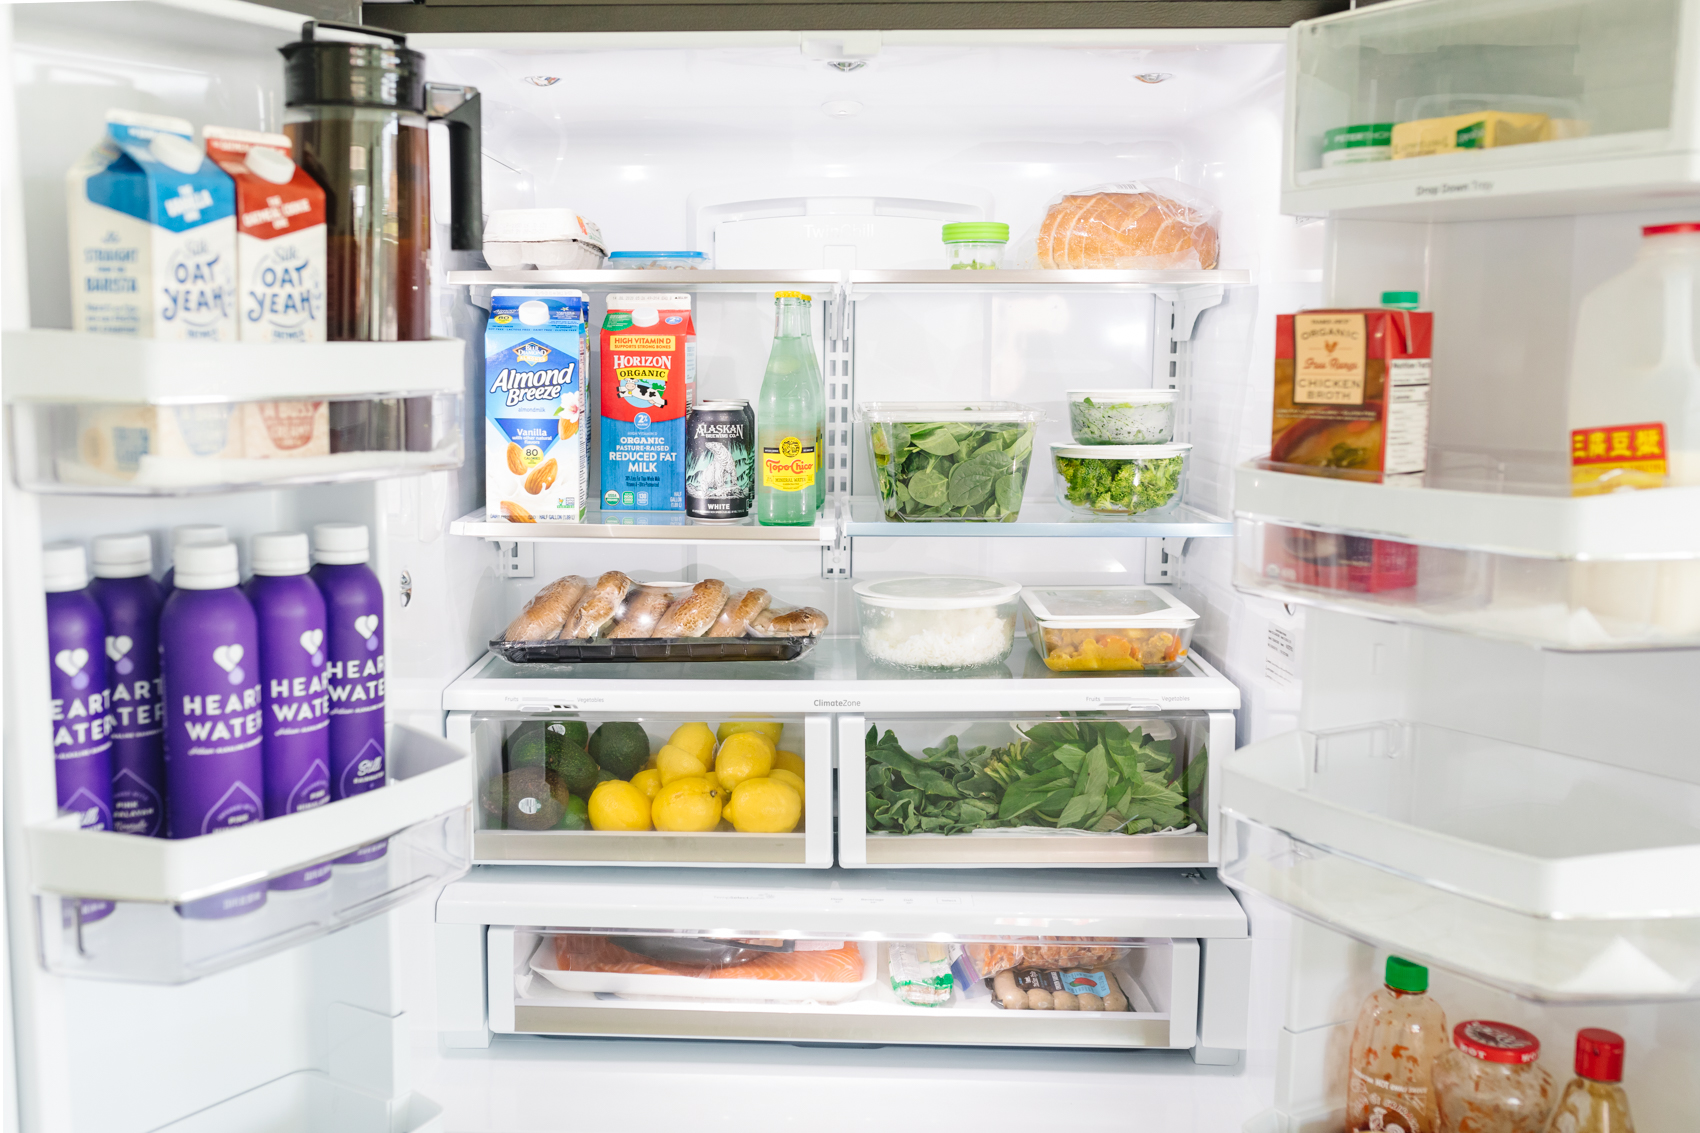 Cafe Appliances refrigerator interior storage capacity